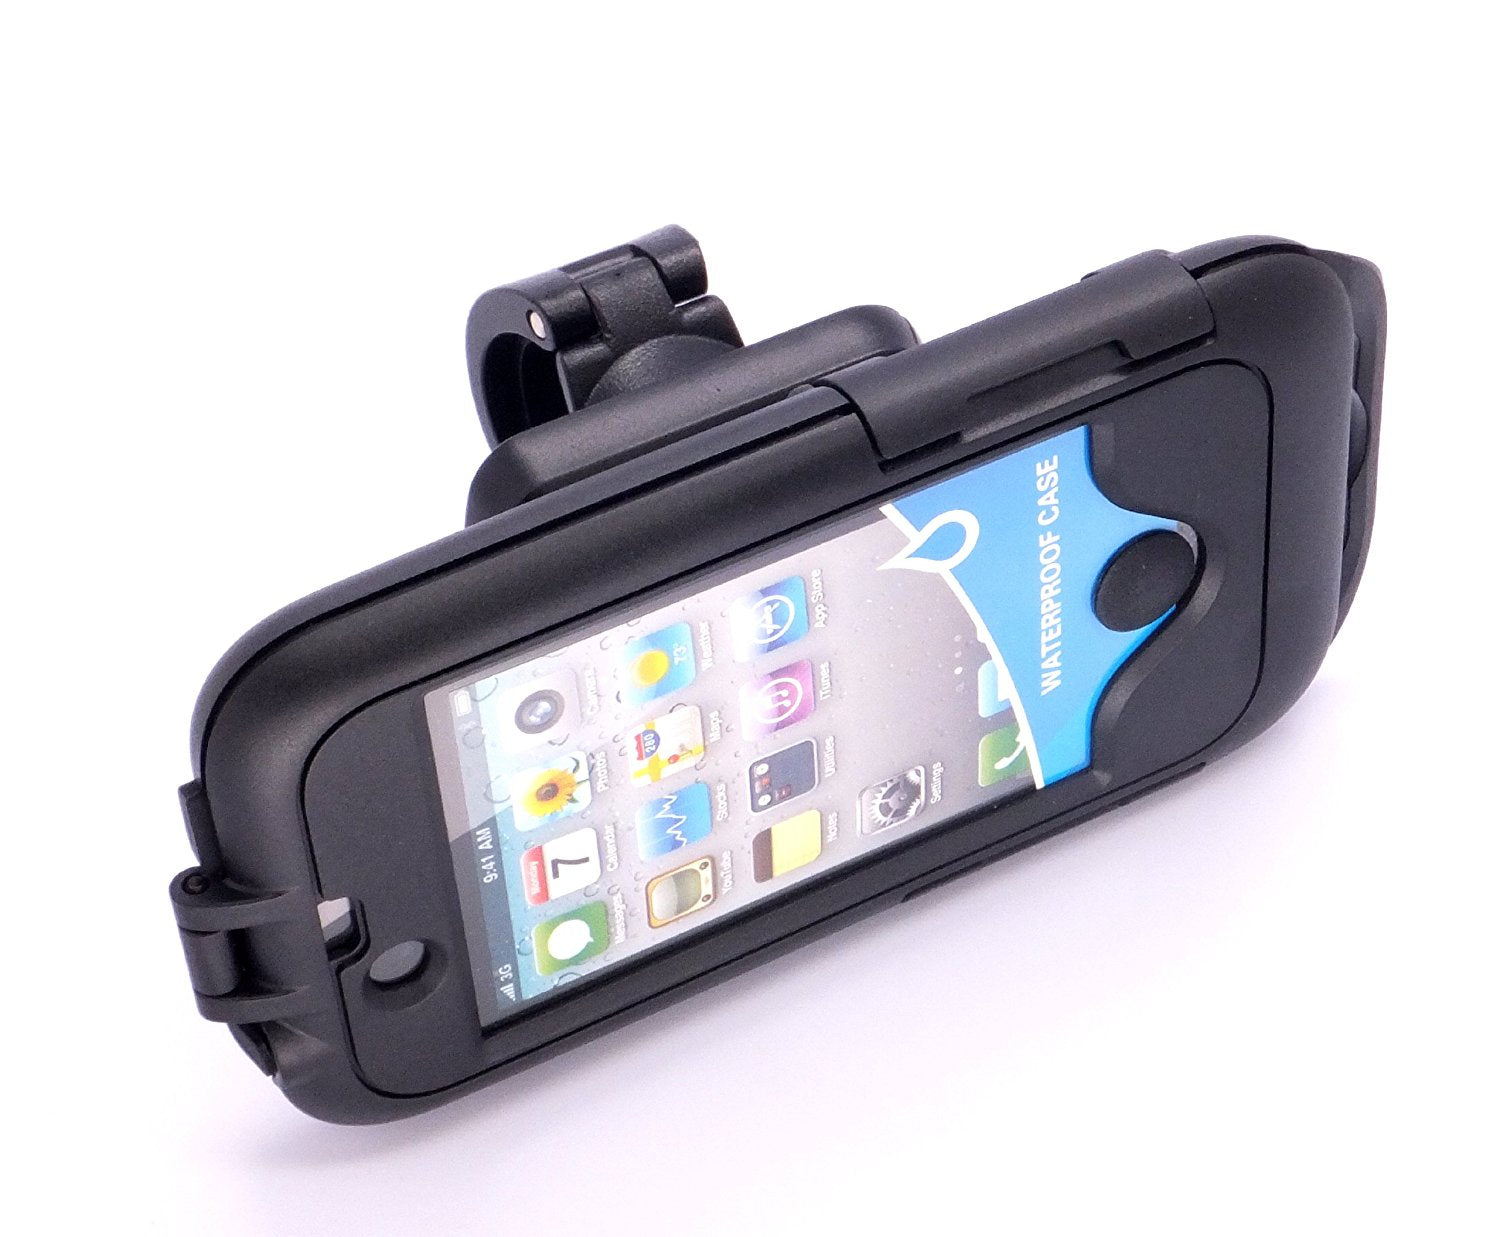 CyberTech Weather-proof Bike / Motorcycle Sport Mount Case for Apple iPhone 4/4S